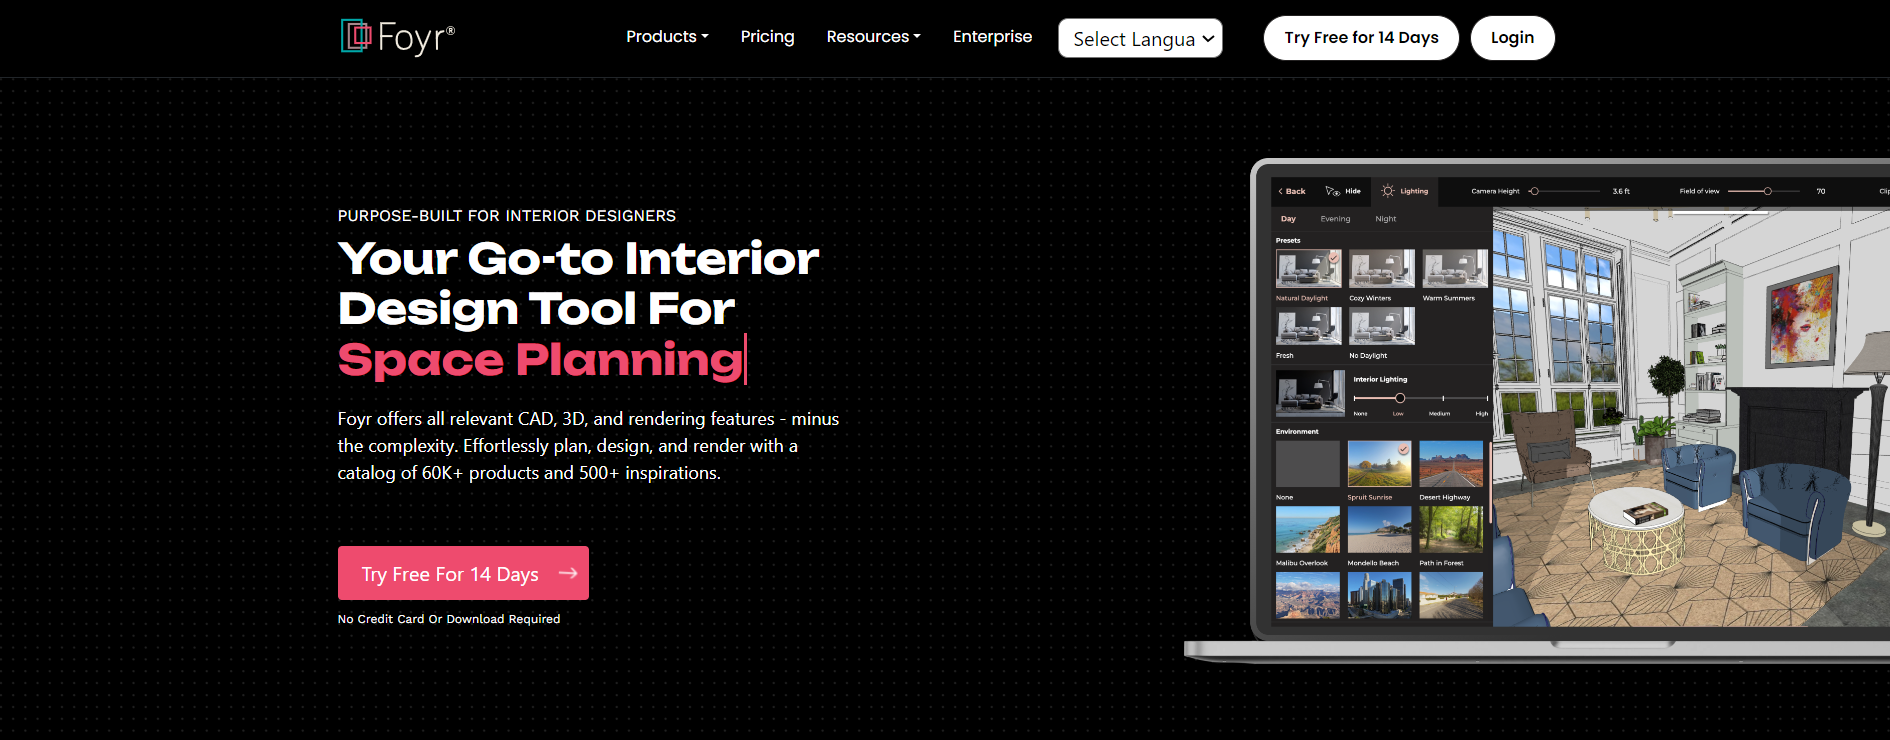 10 Best Interior Design Project Management Software | #9 Foyr Neo